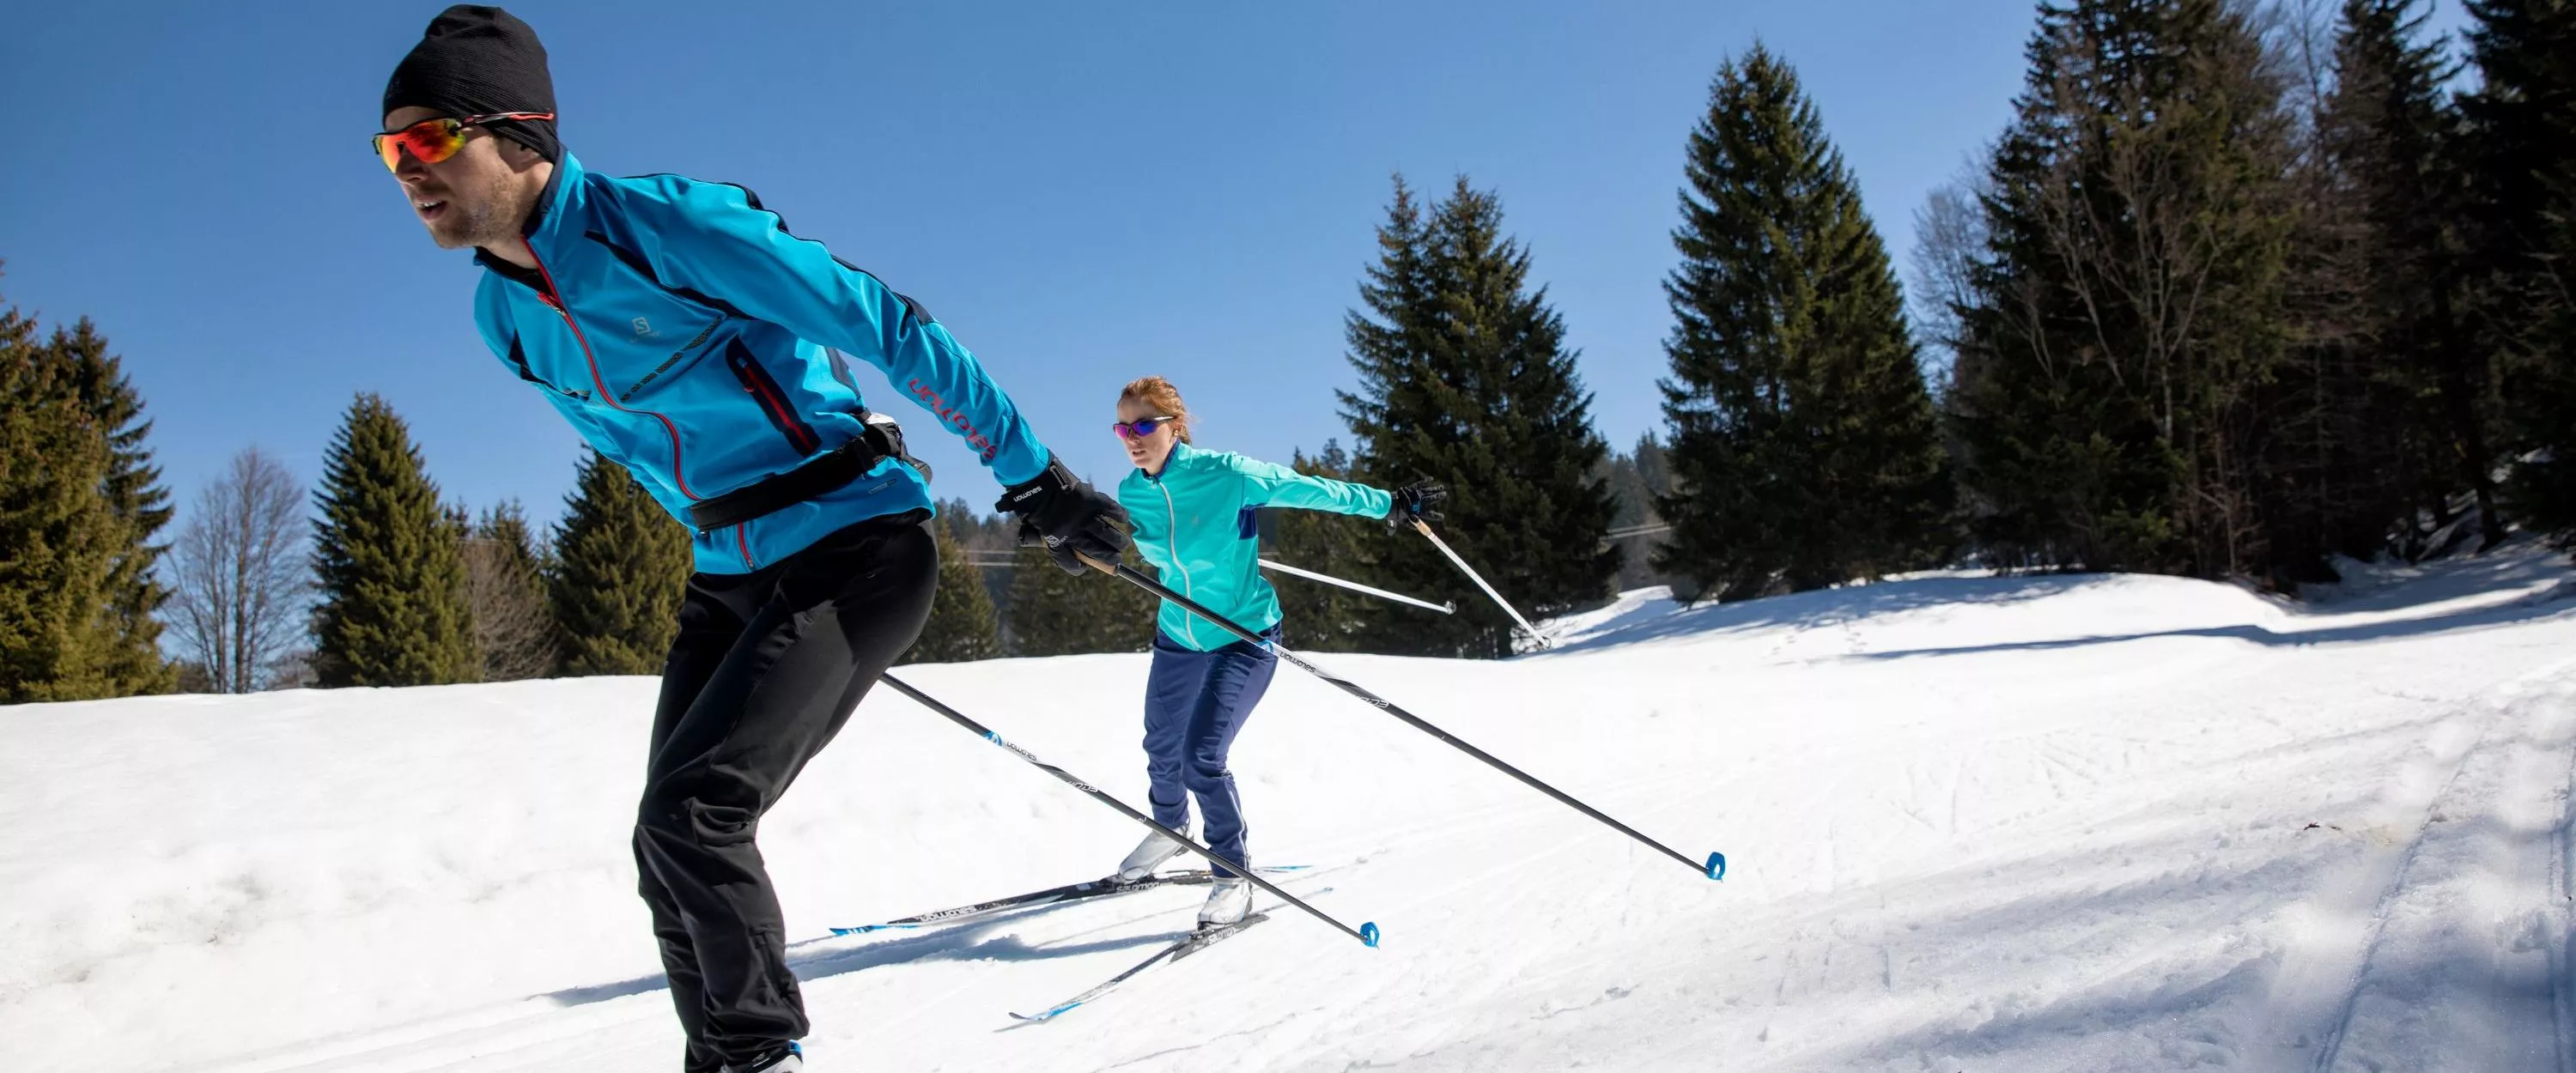 SportScheck Berg + Ski in Germany, Europe | Snowboarding,Skiing - Rated 0.9